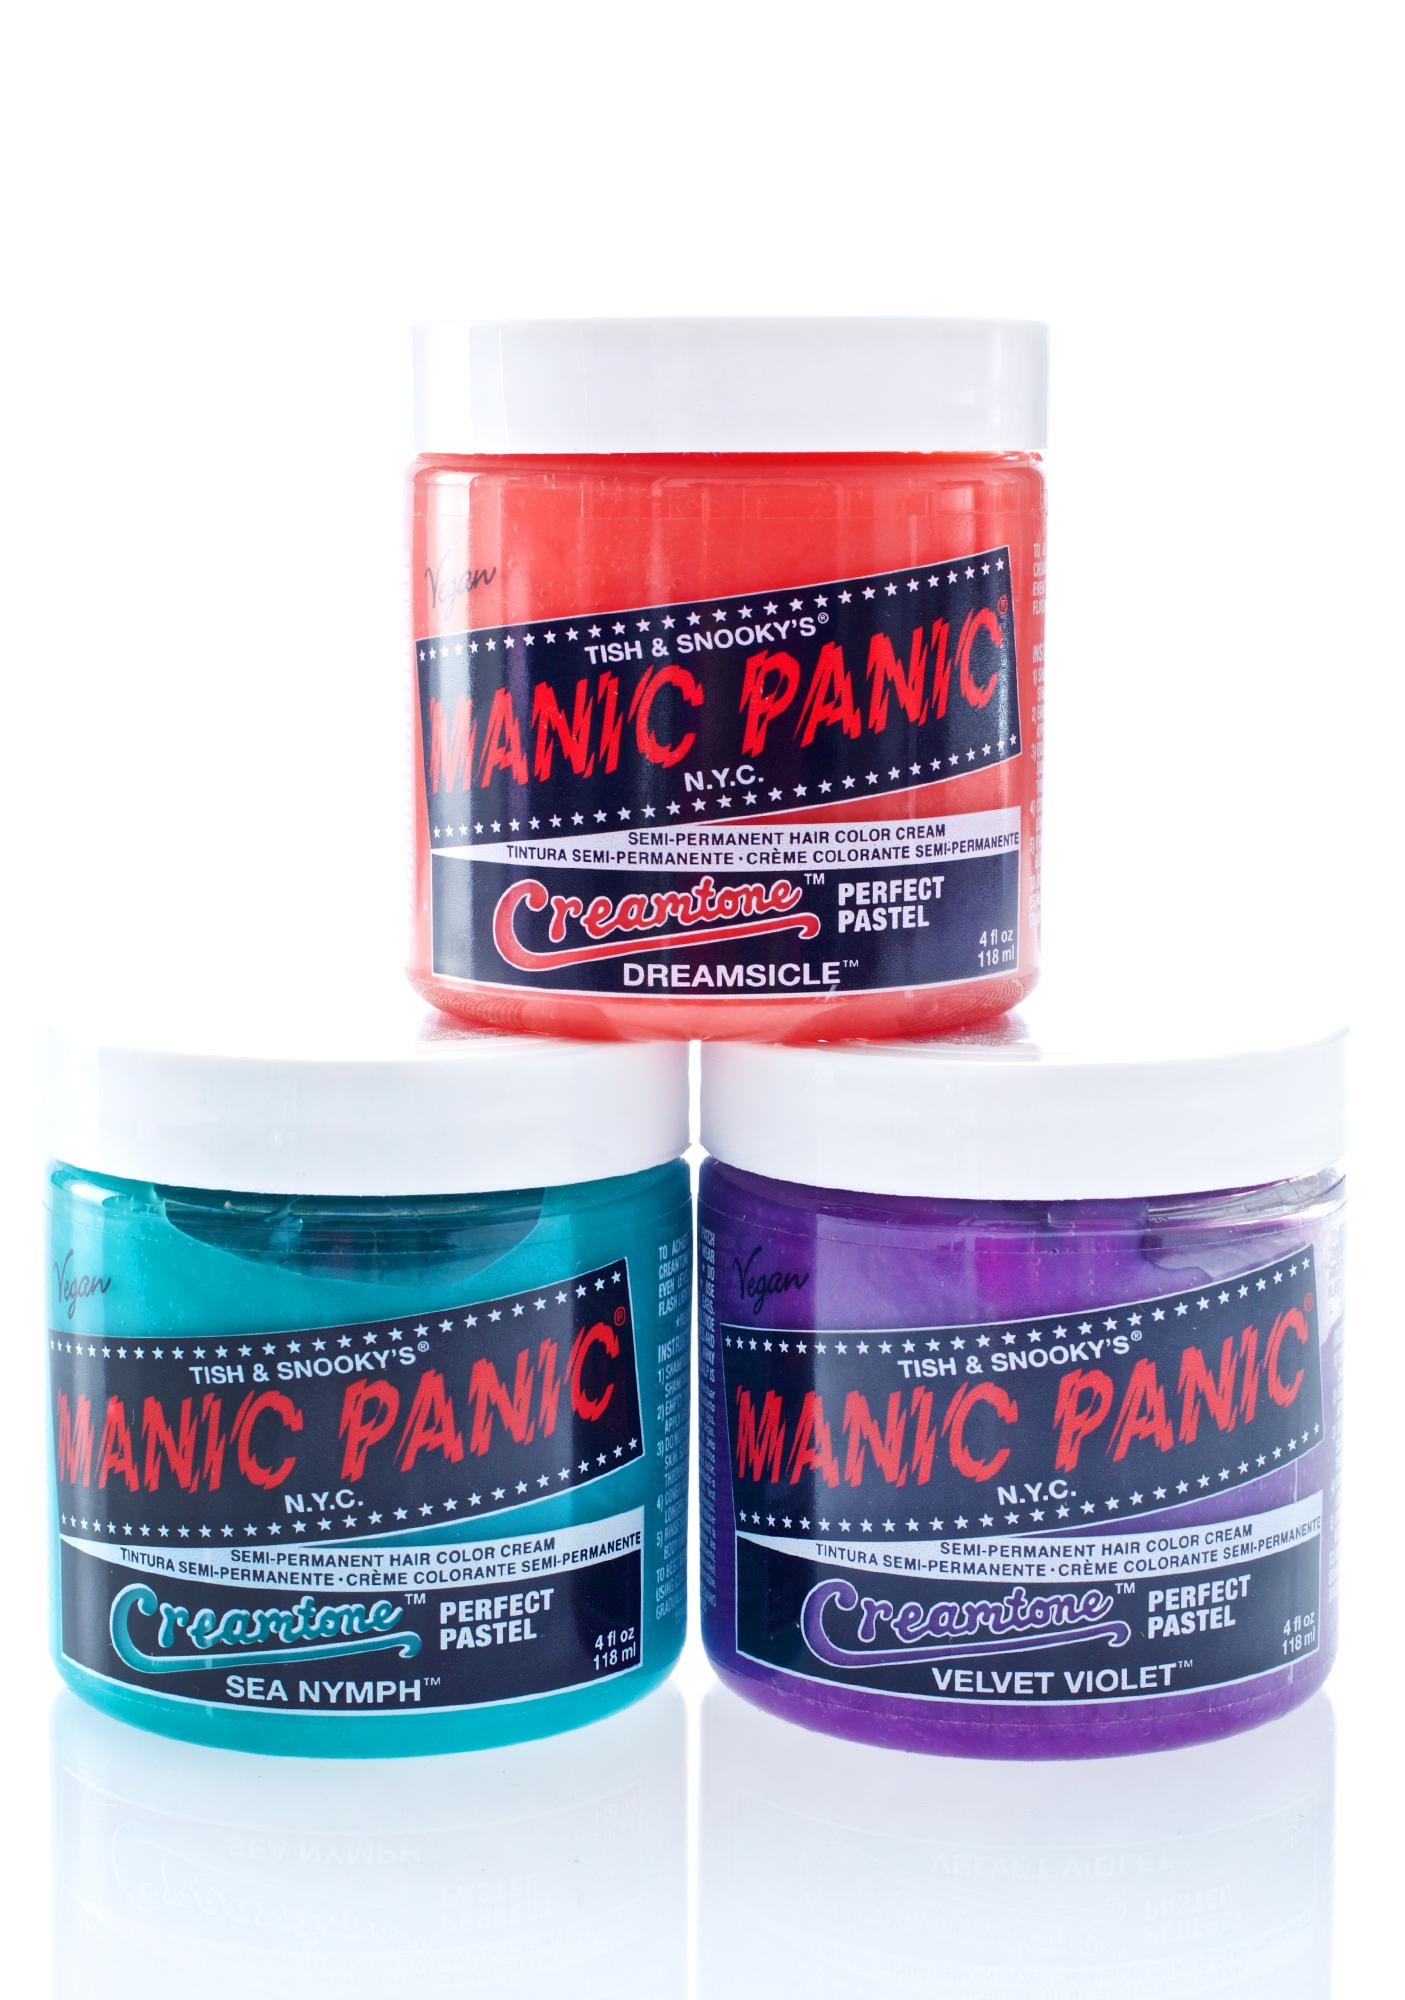 Manic Panic Dreamsicle Creamtone Hair Dye Dolls Kill